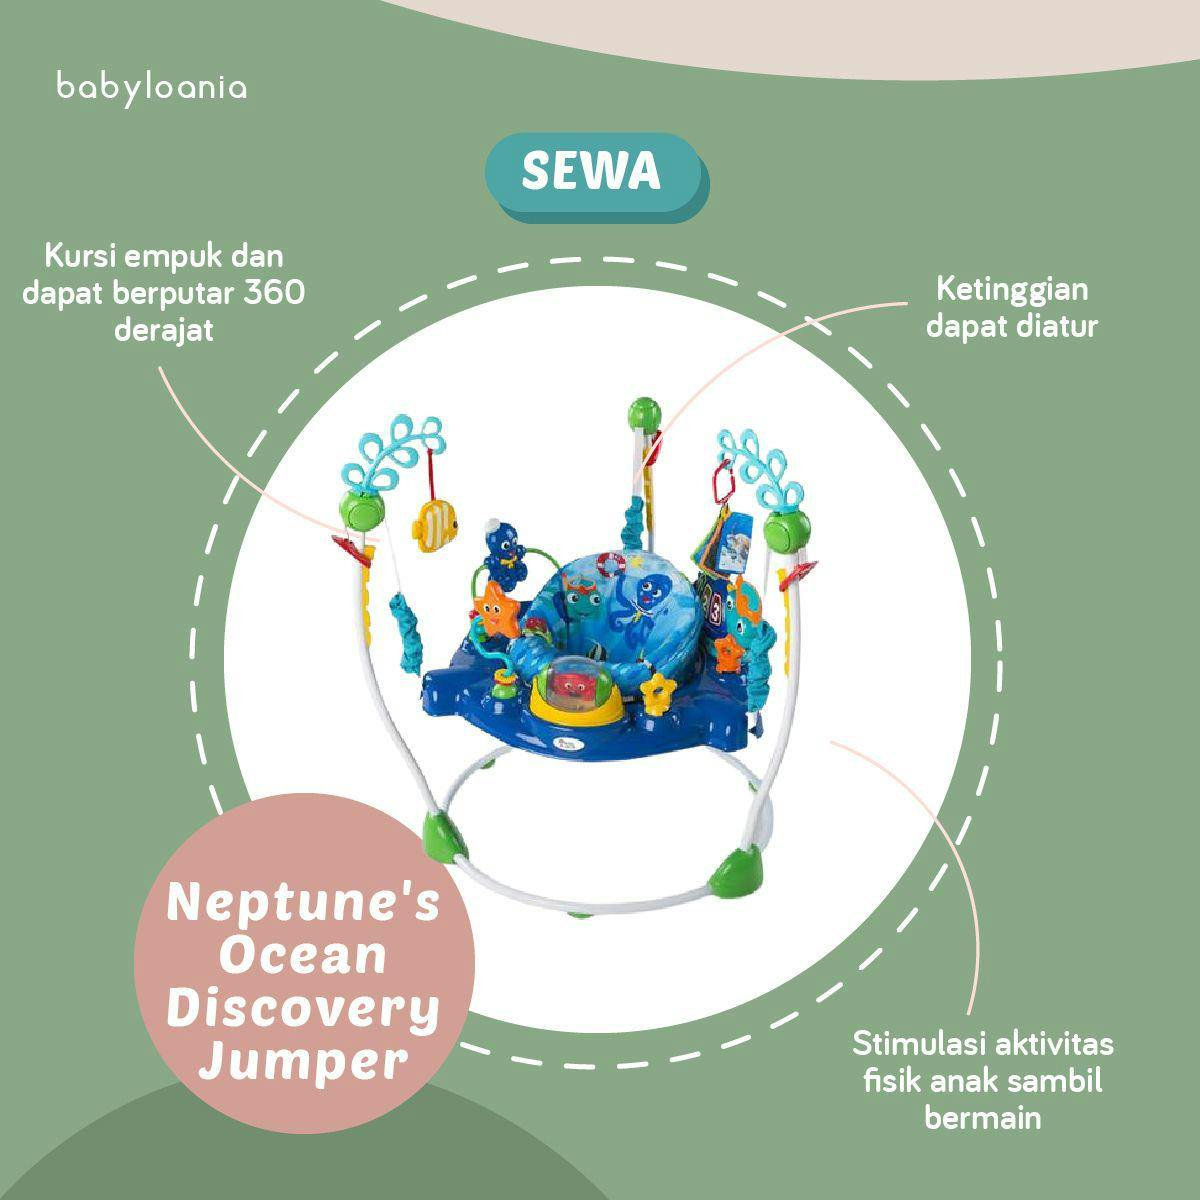 Neptune's Ocean Discovery Jumper